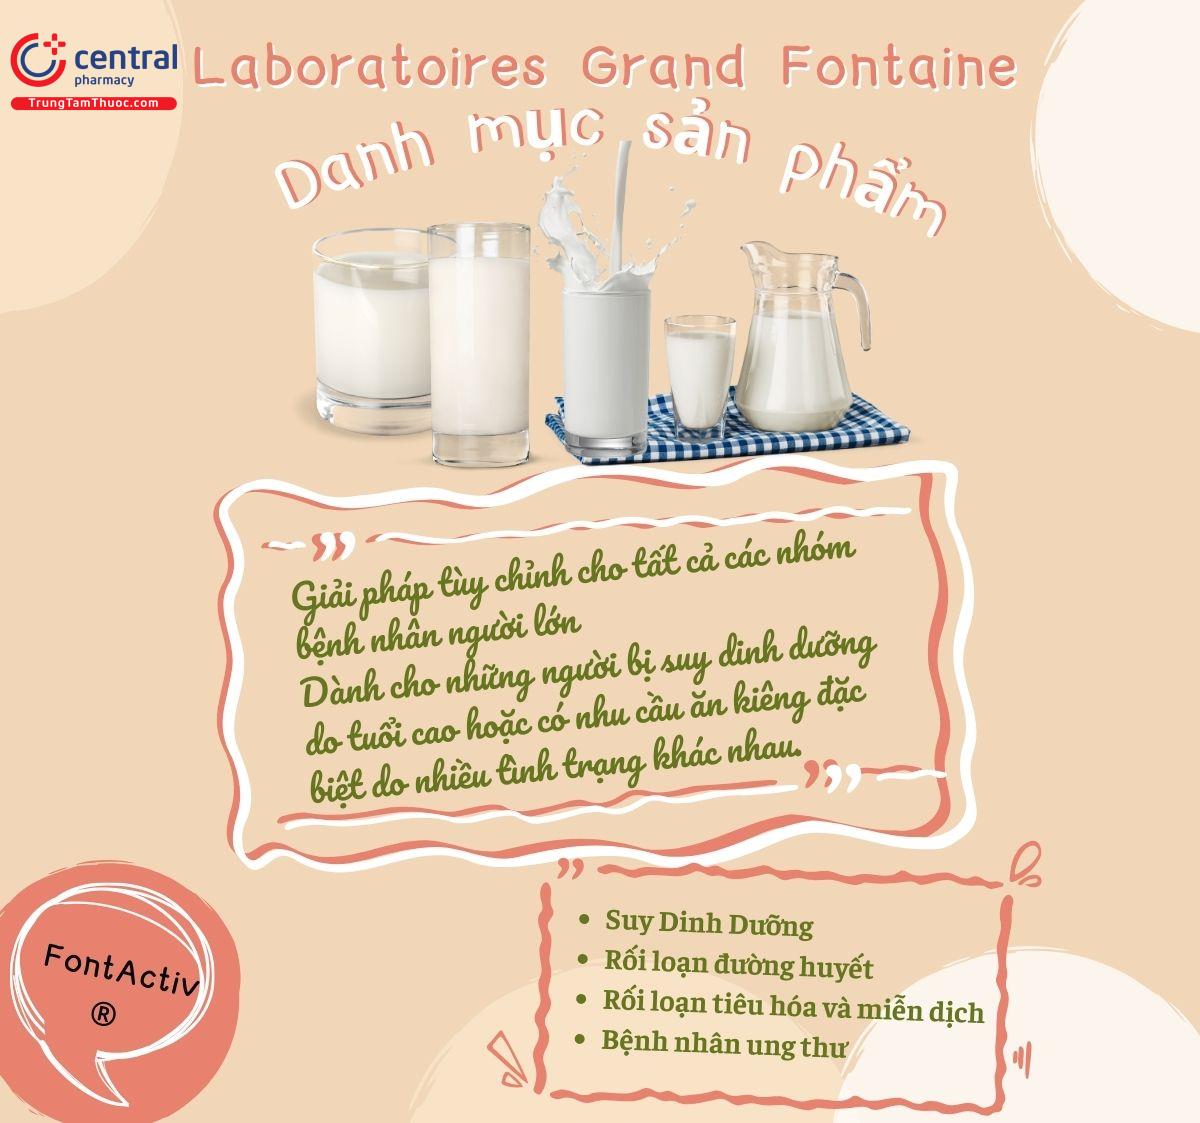 Lĩnh vực Laboratoires Grand Fontaine hoạt động